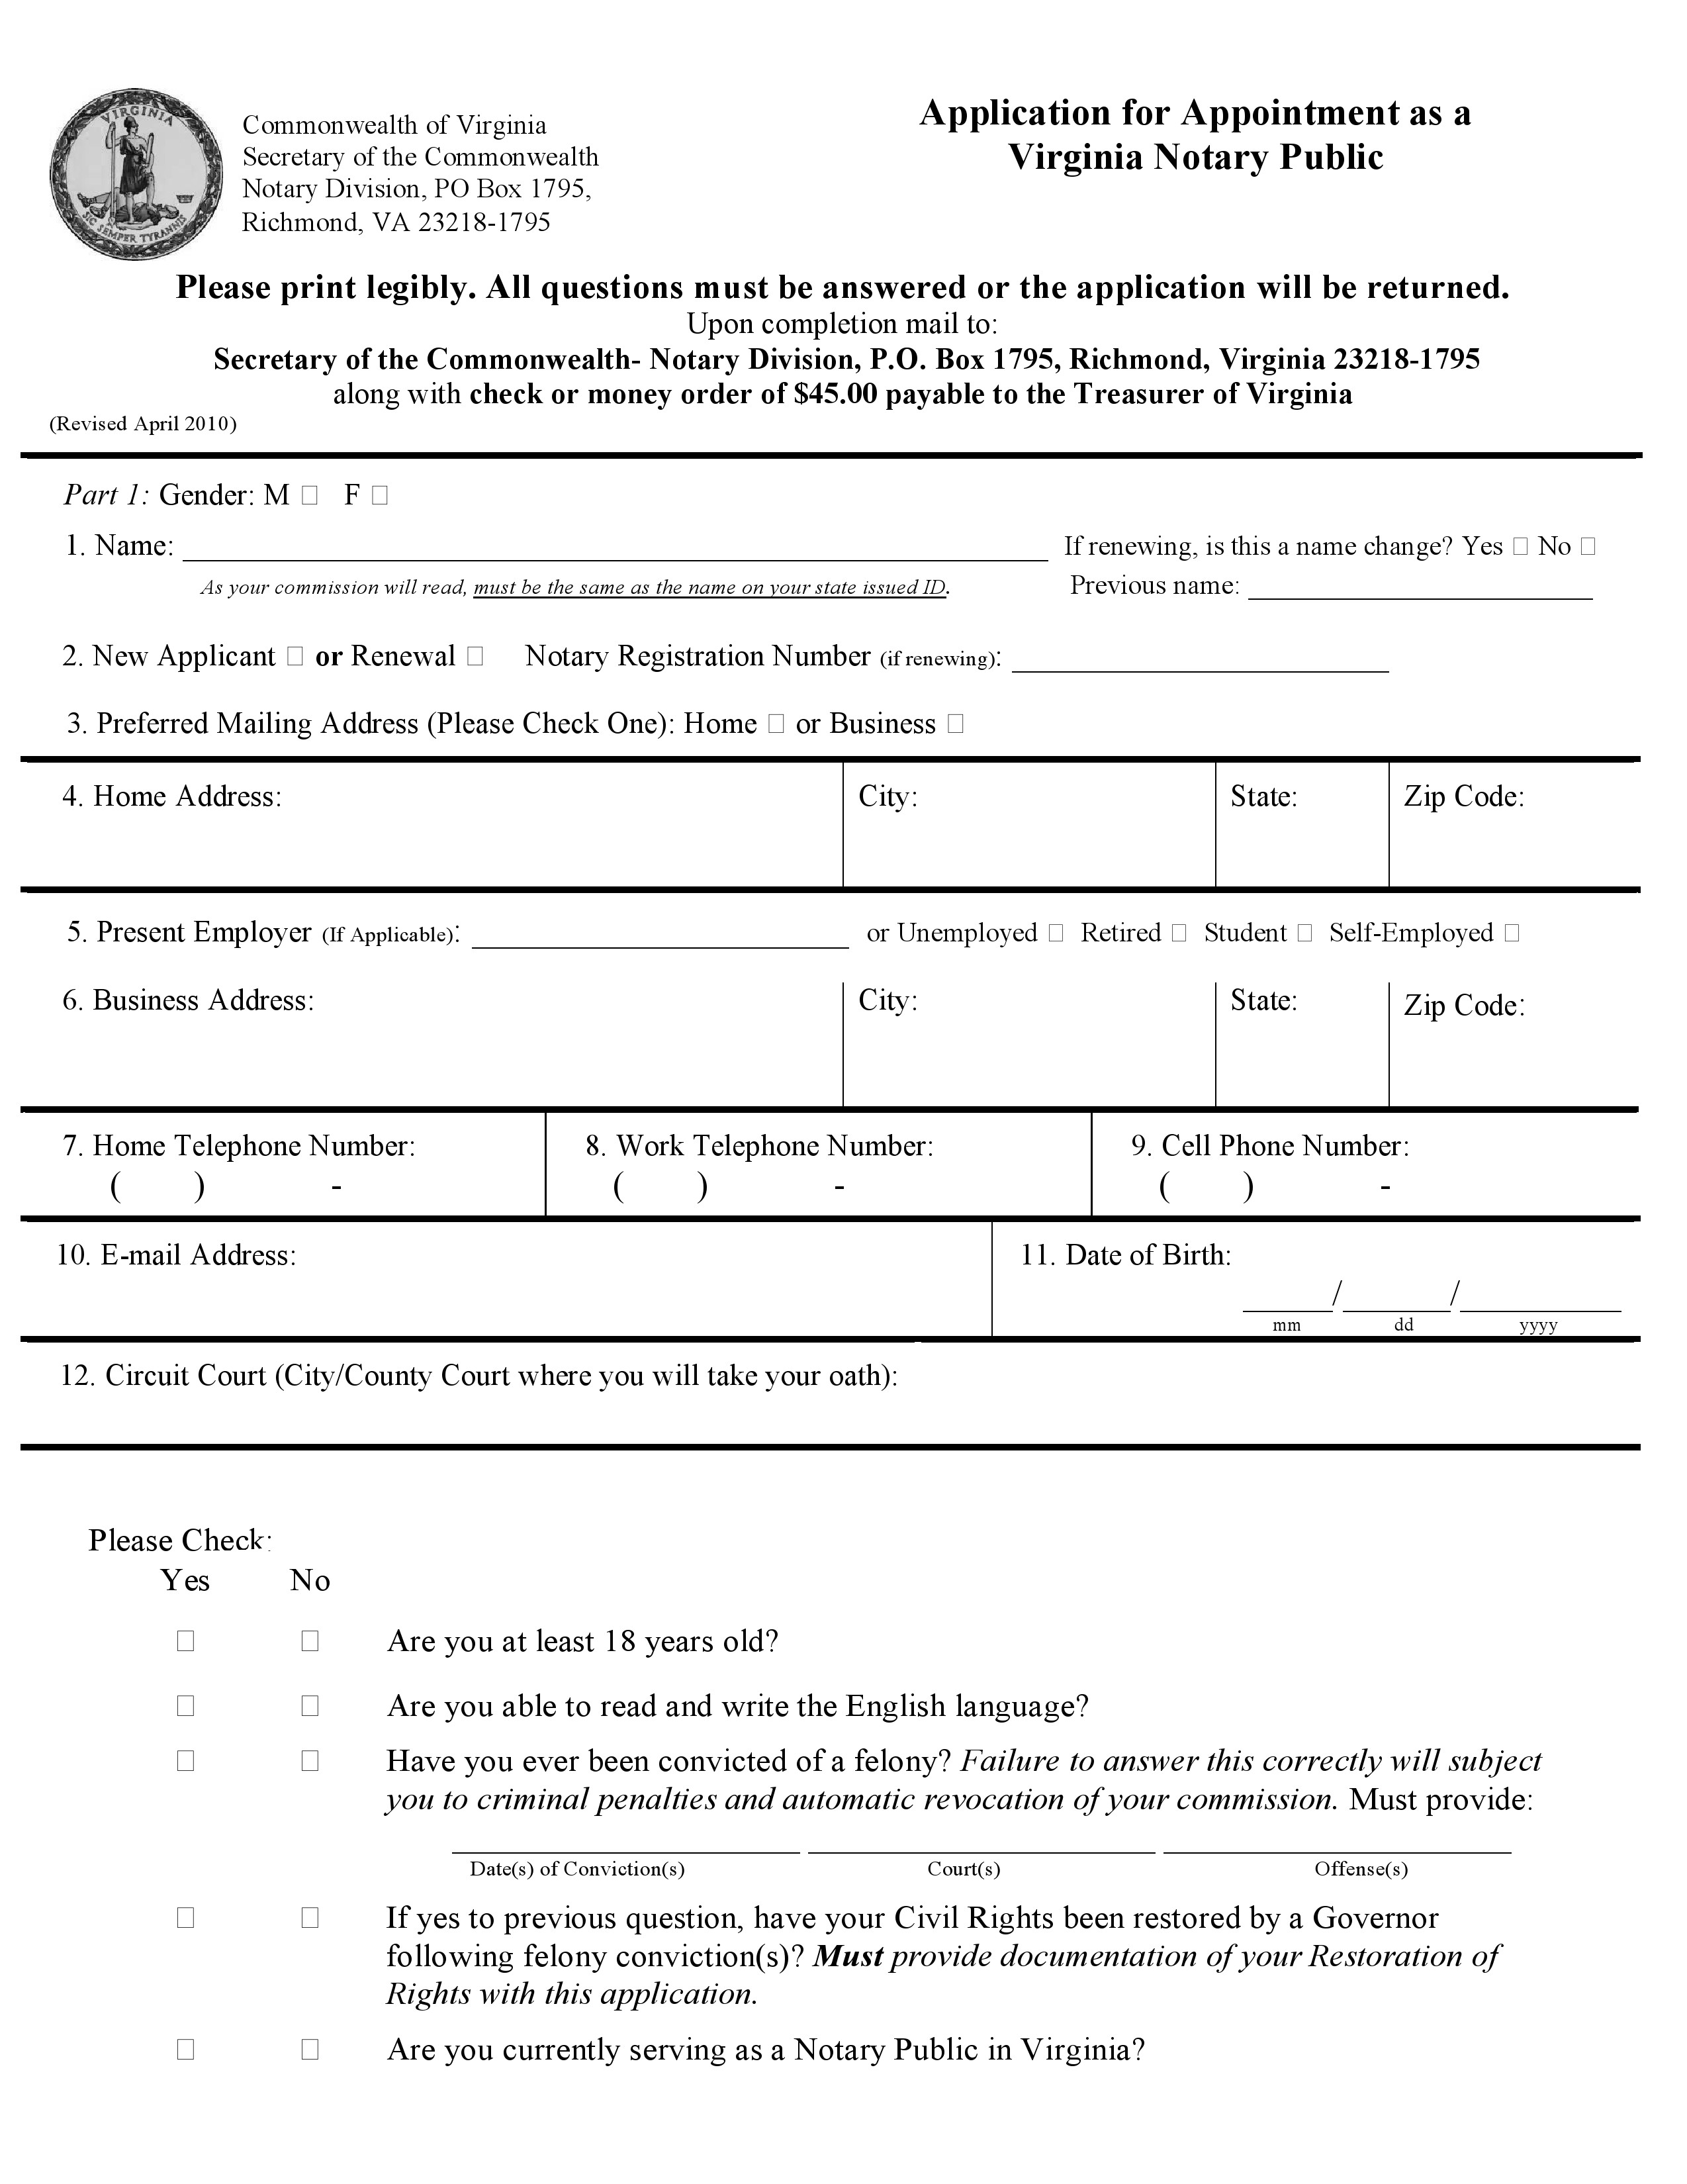 Virginia Notary Public Application Form